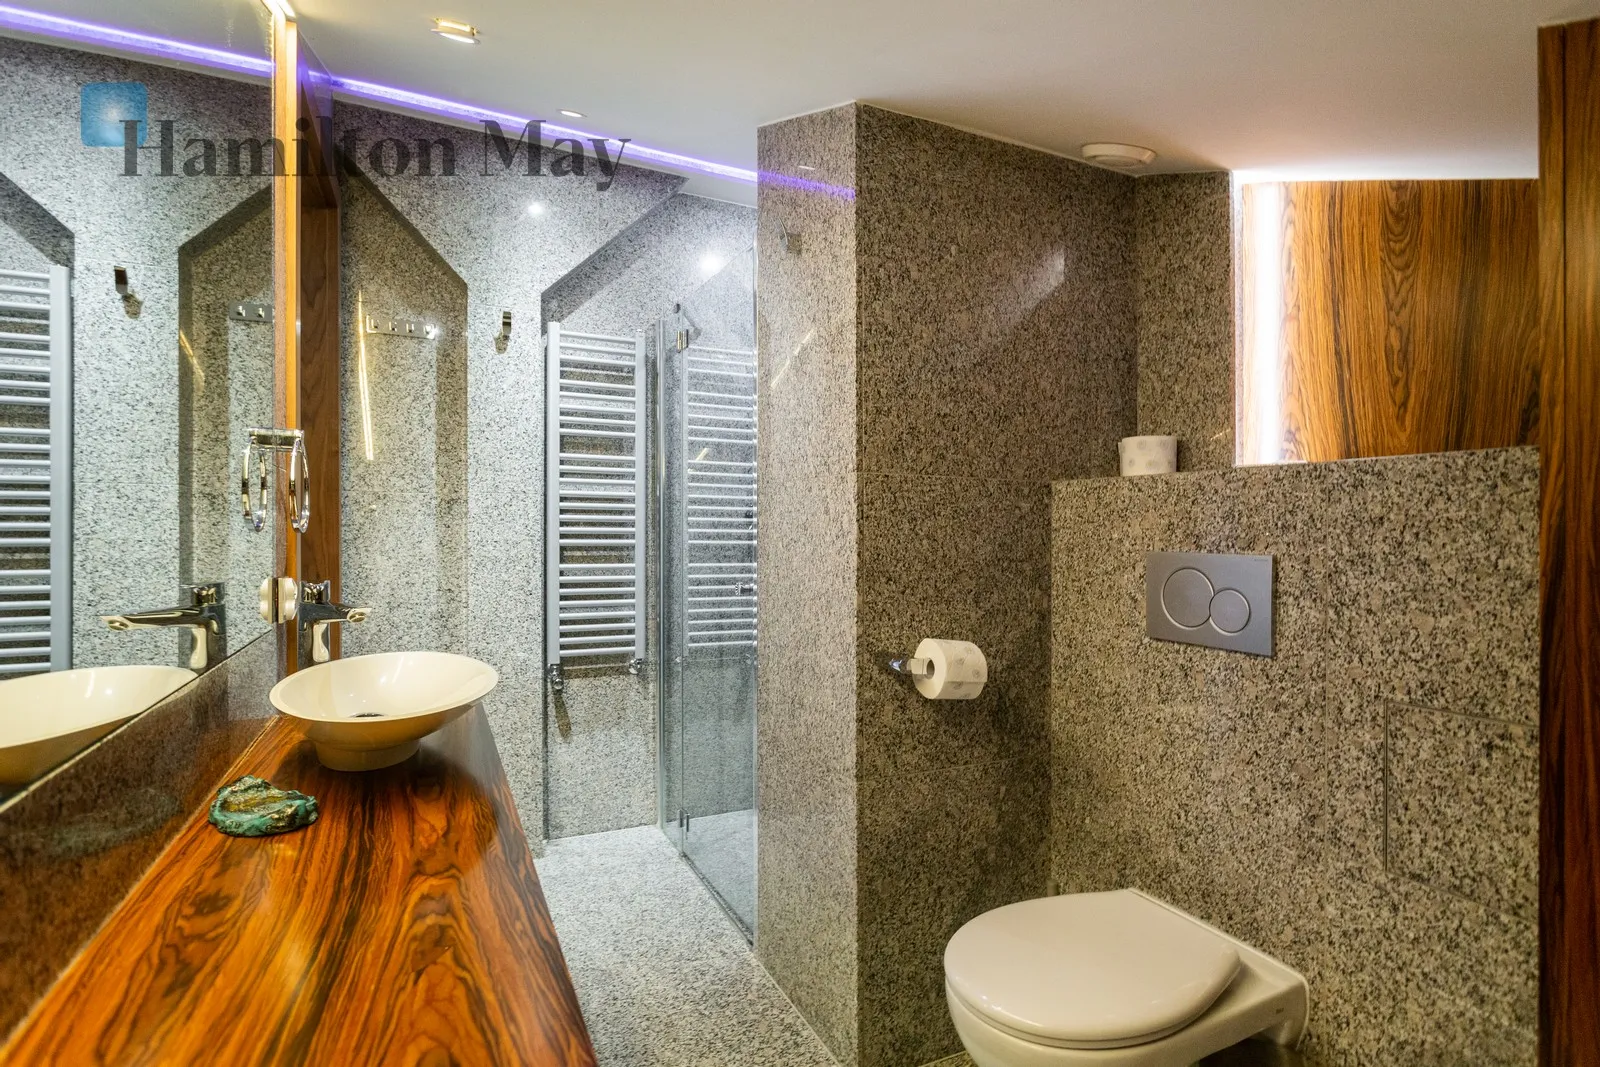 Level: 4 Price: 3350 PLN Bedrooms: 1 Bathrooms: 1 Size: 60m2 Price/m2: 56 PLN